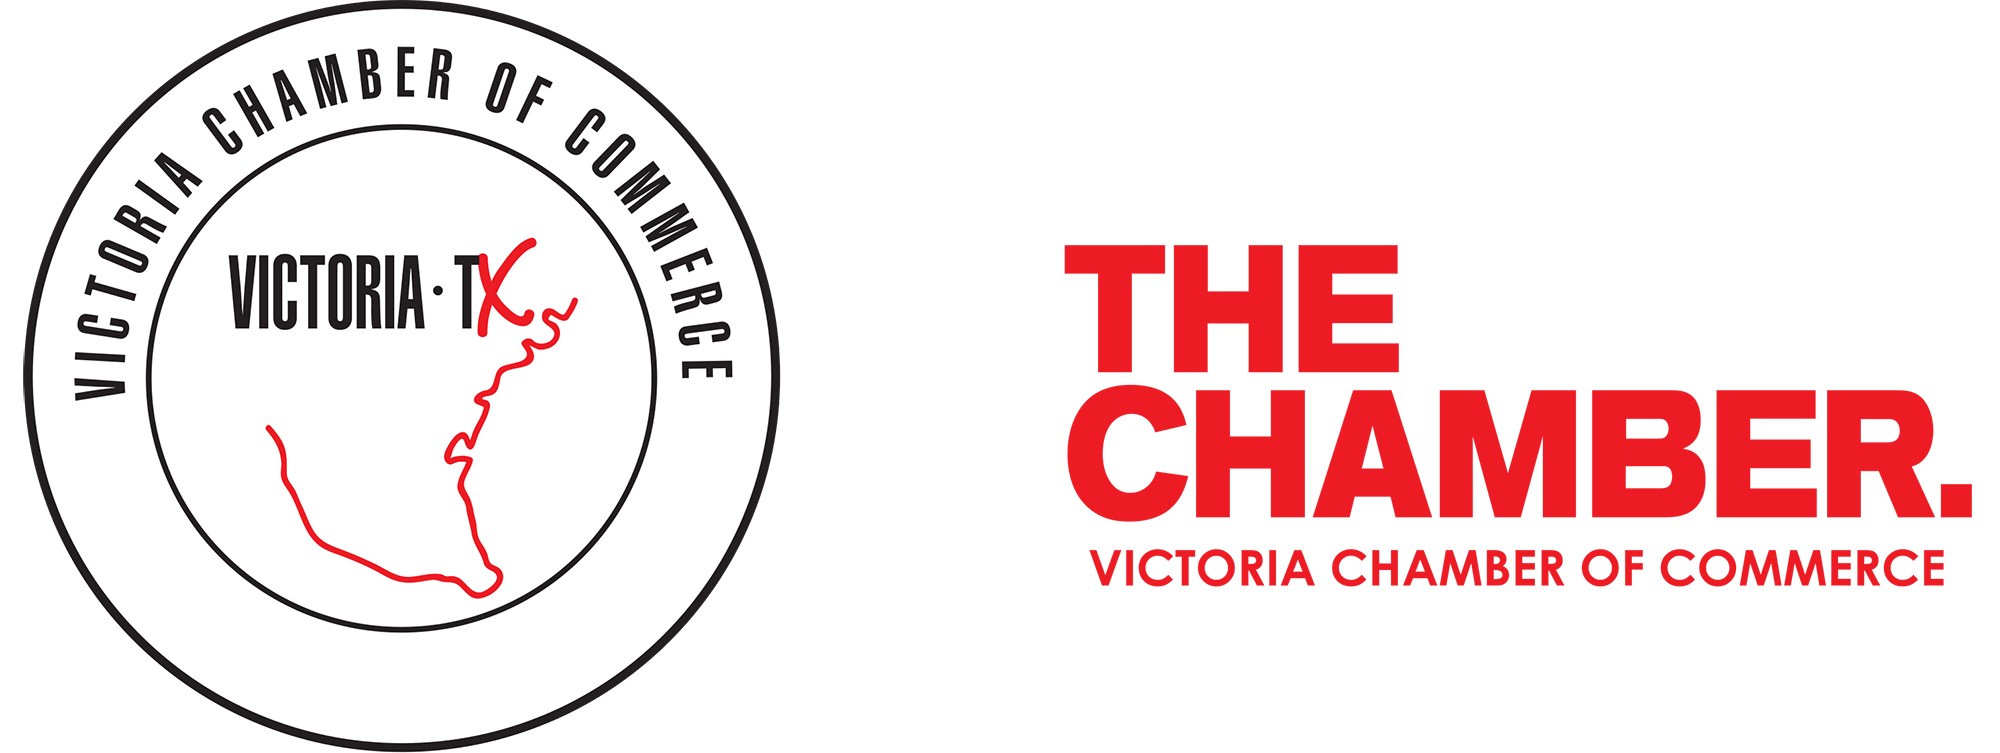 Victoria Chamber logo